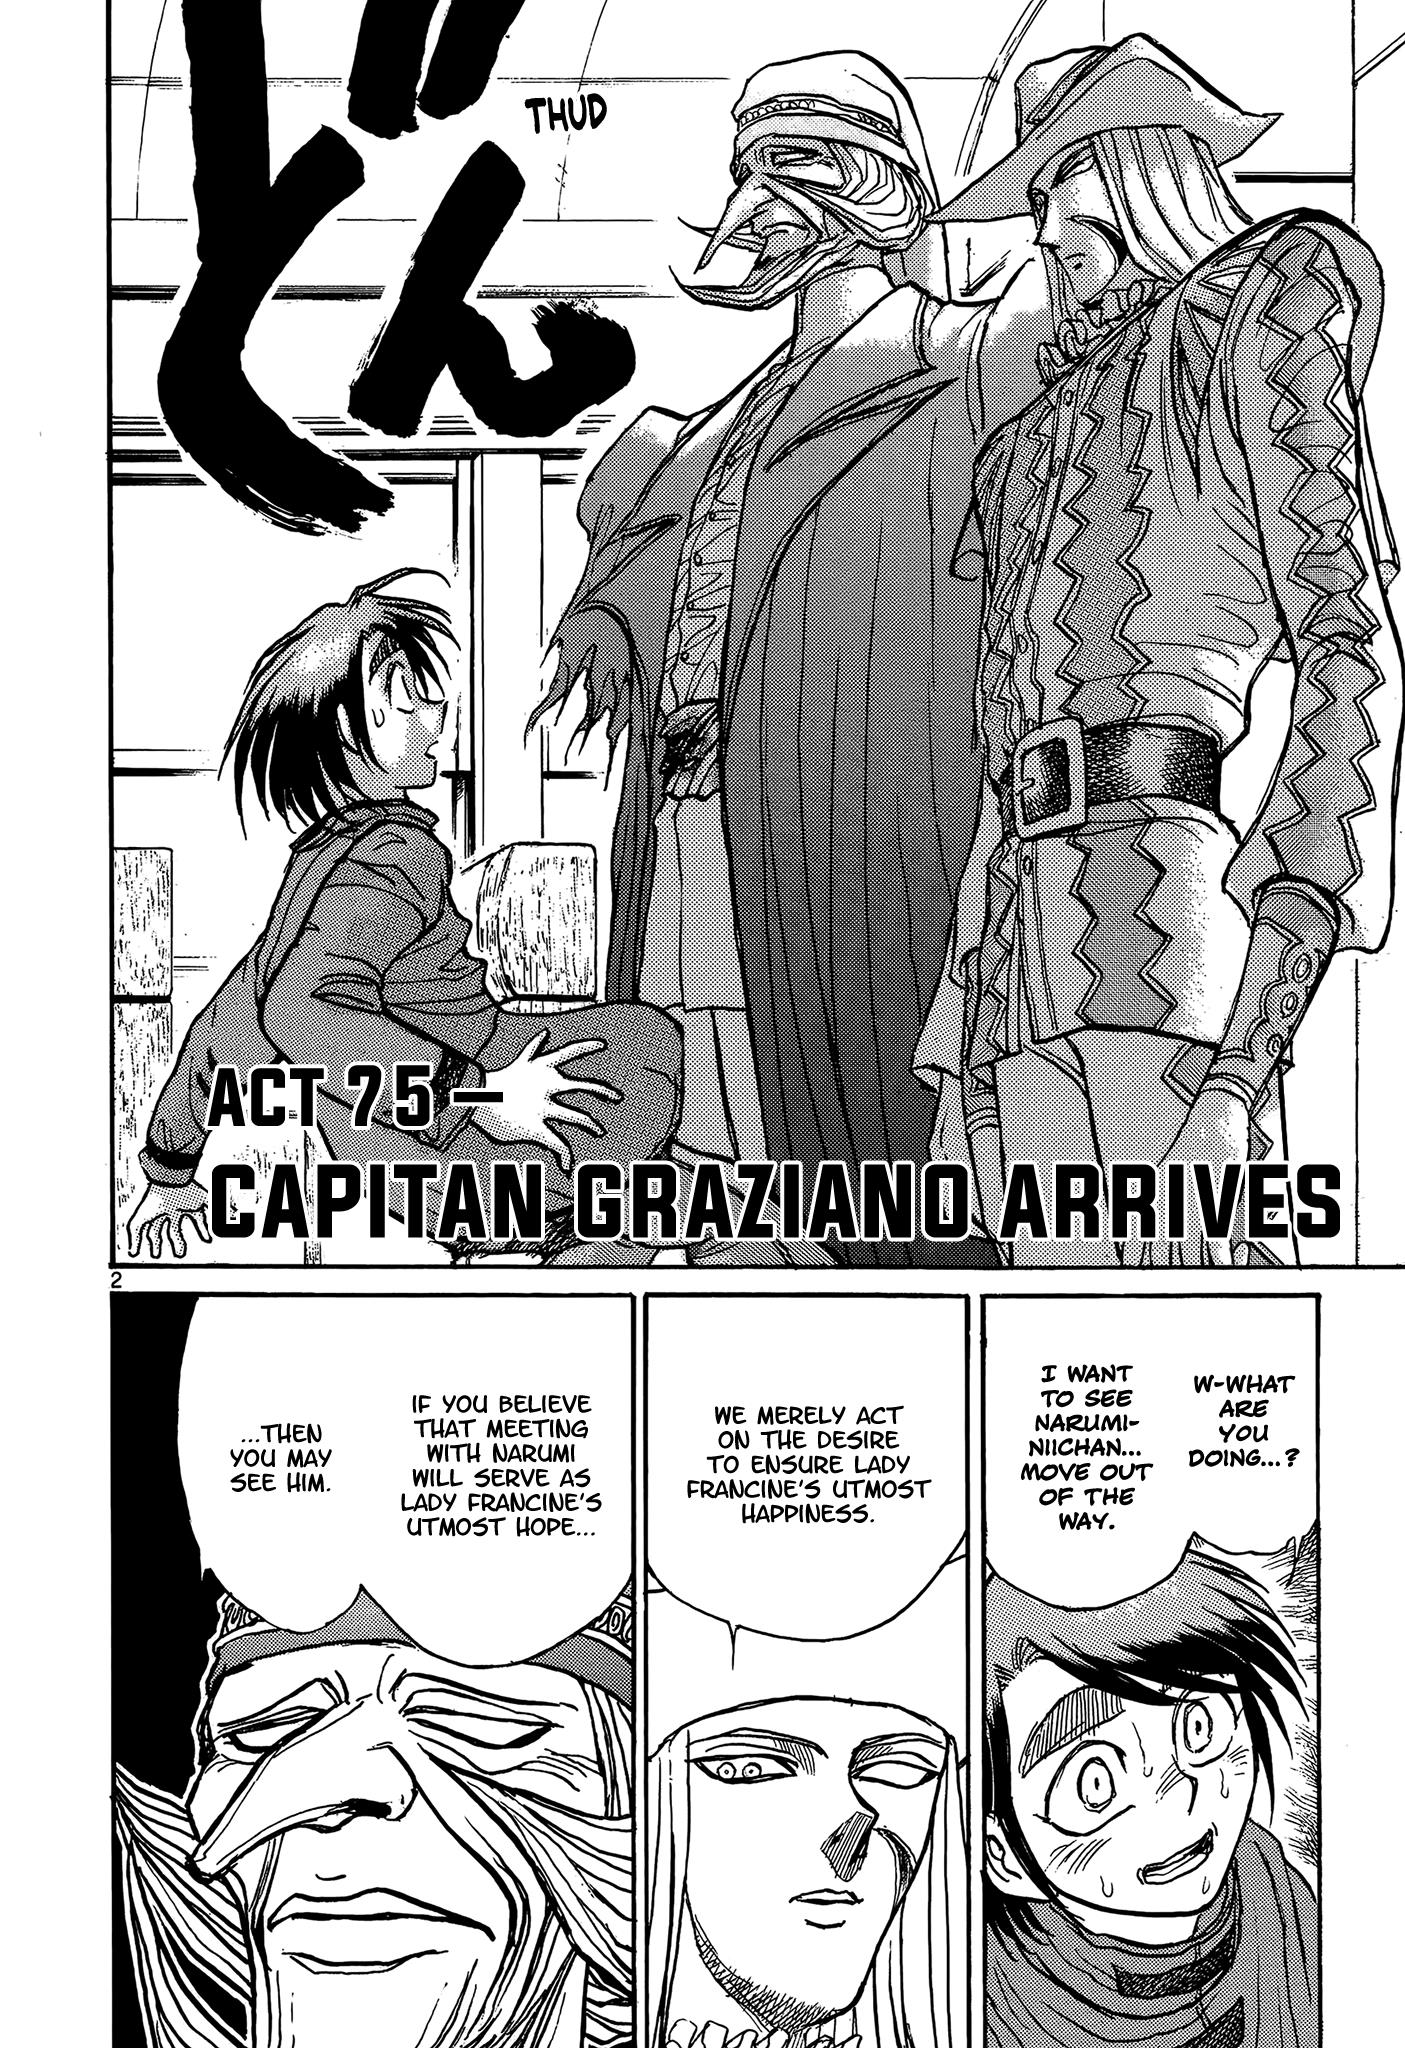 Karakuri Circus Vol.42 Chapter 408: Deus Ex Machina - Act 75 - Capitan Graziano Arrives - Picture 2